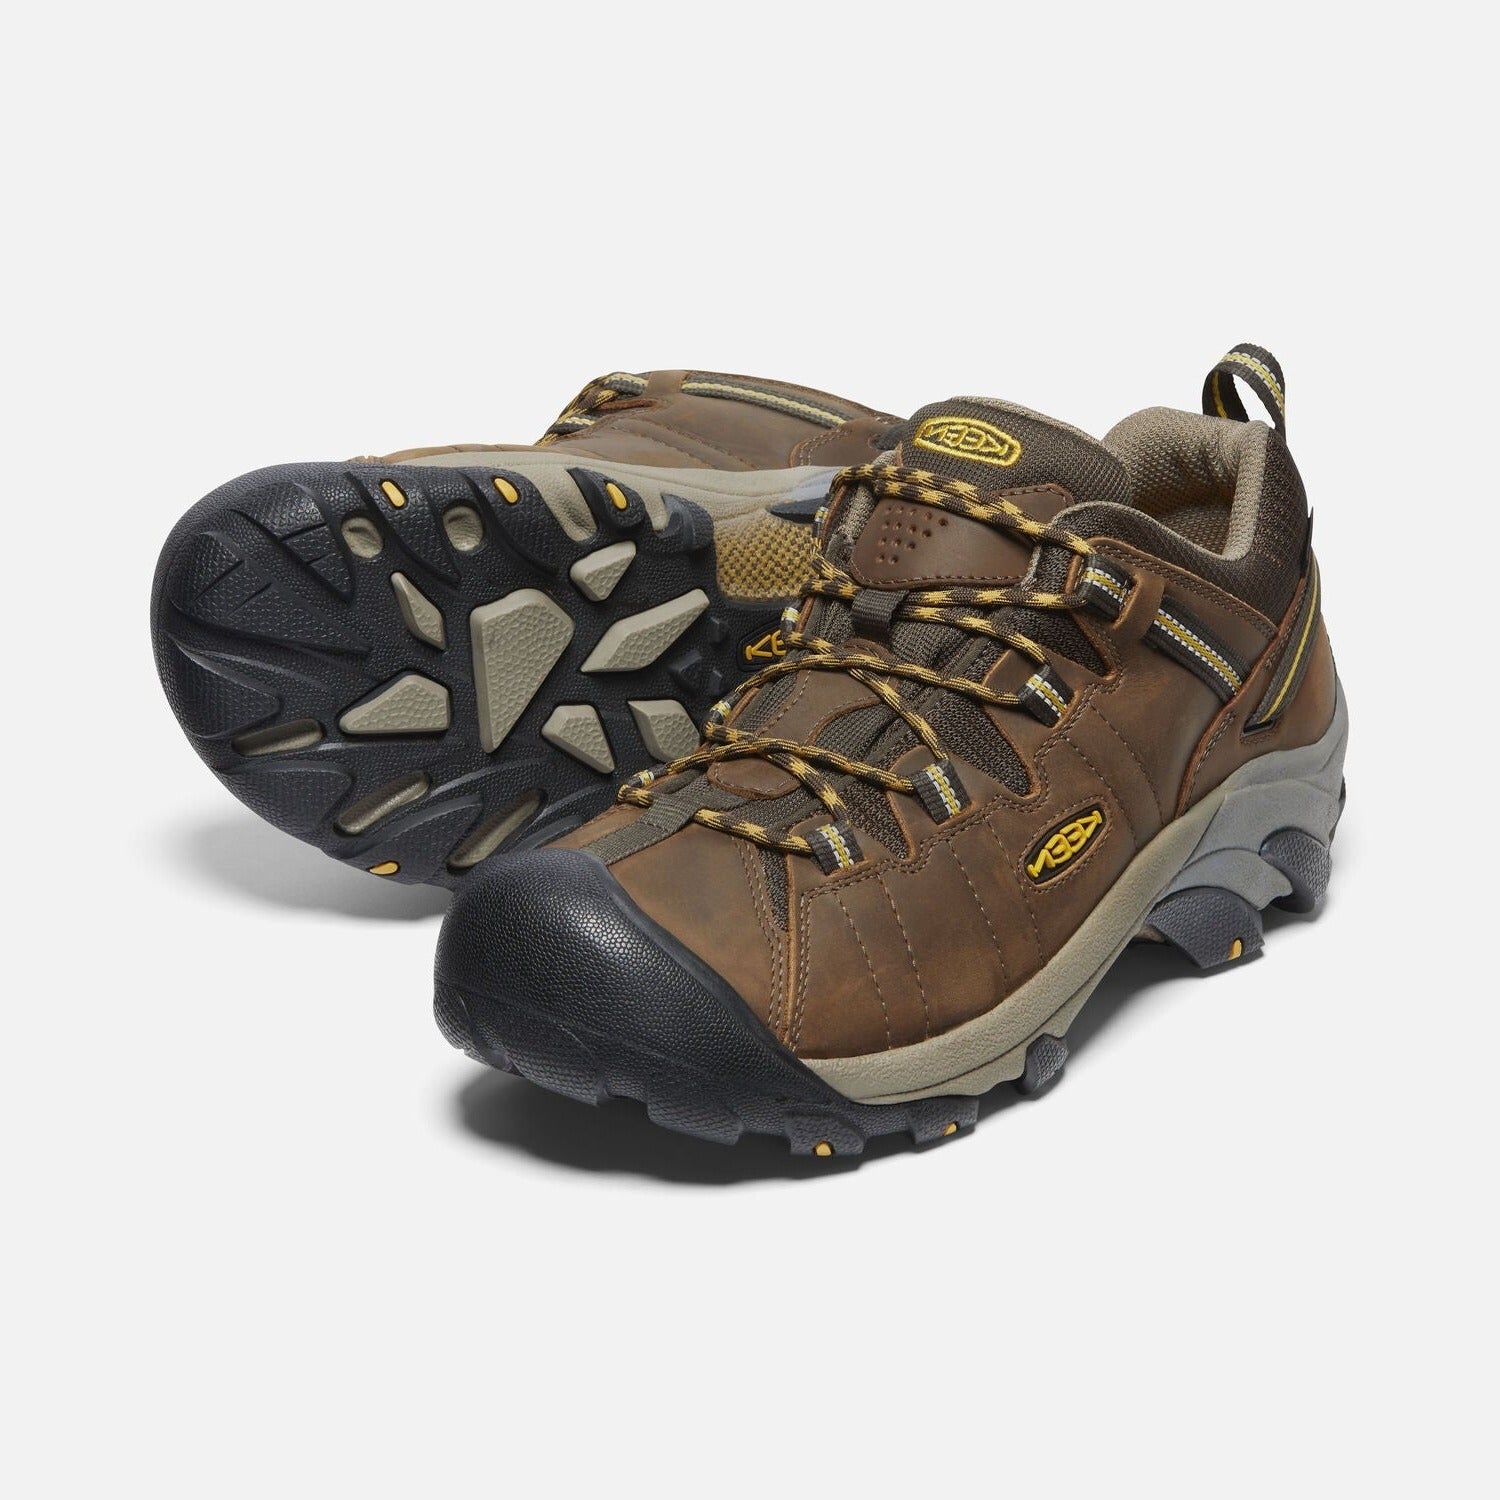 Targhee II Waterproof | Men's | Leather | Cascade Brown/Golden Yellow - Shoe - Keen